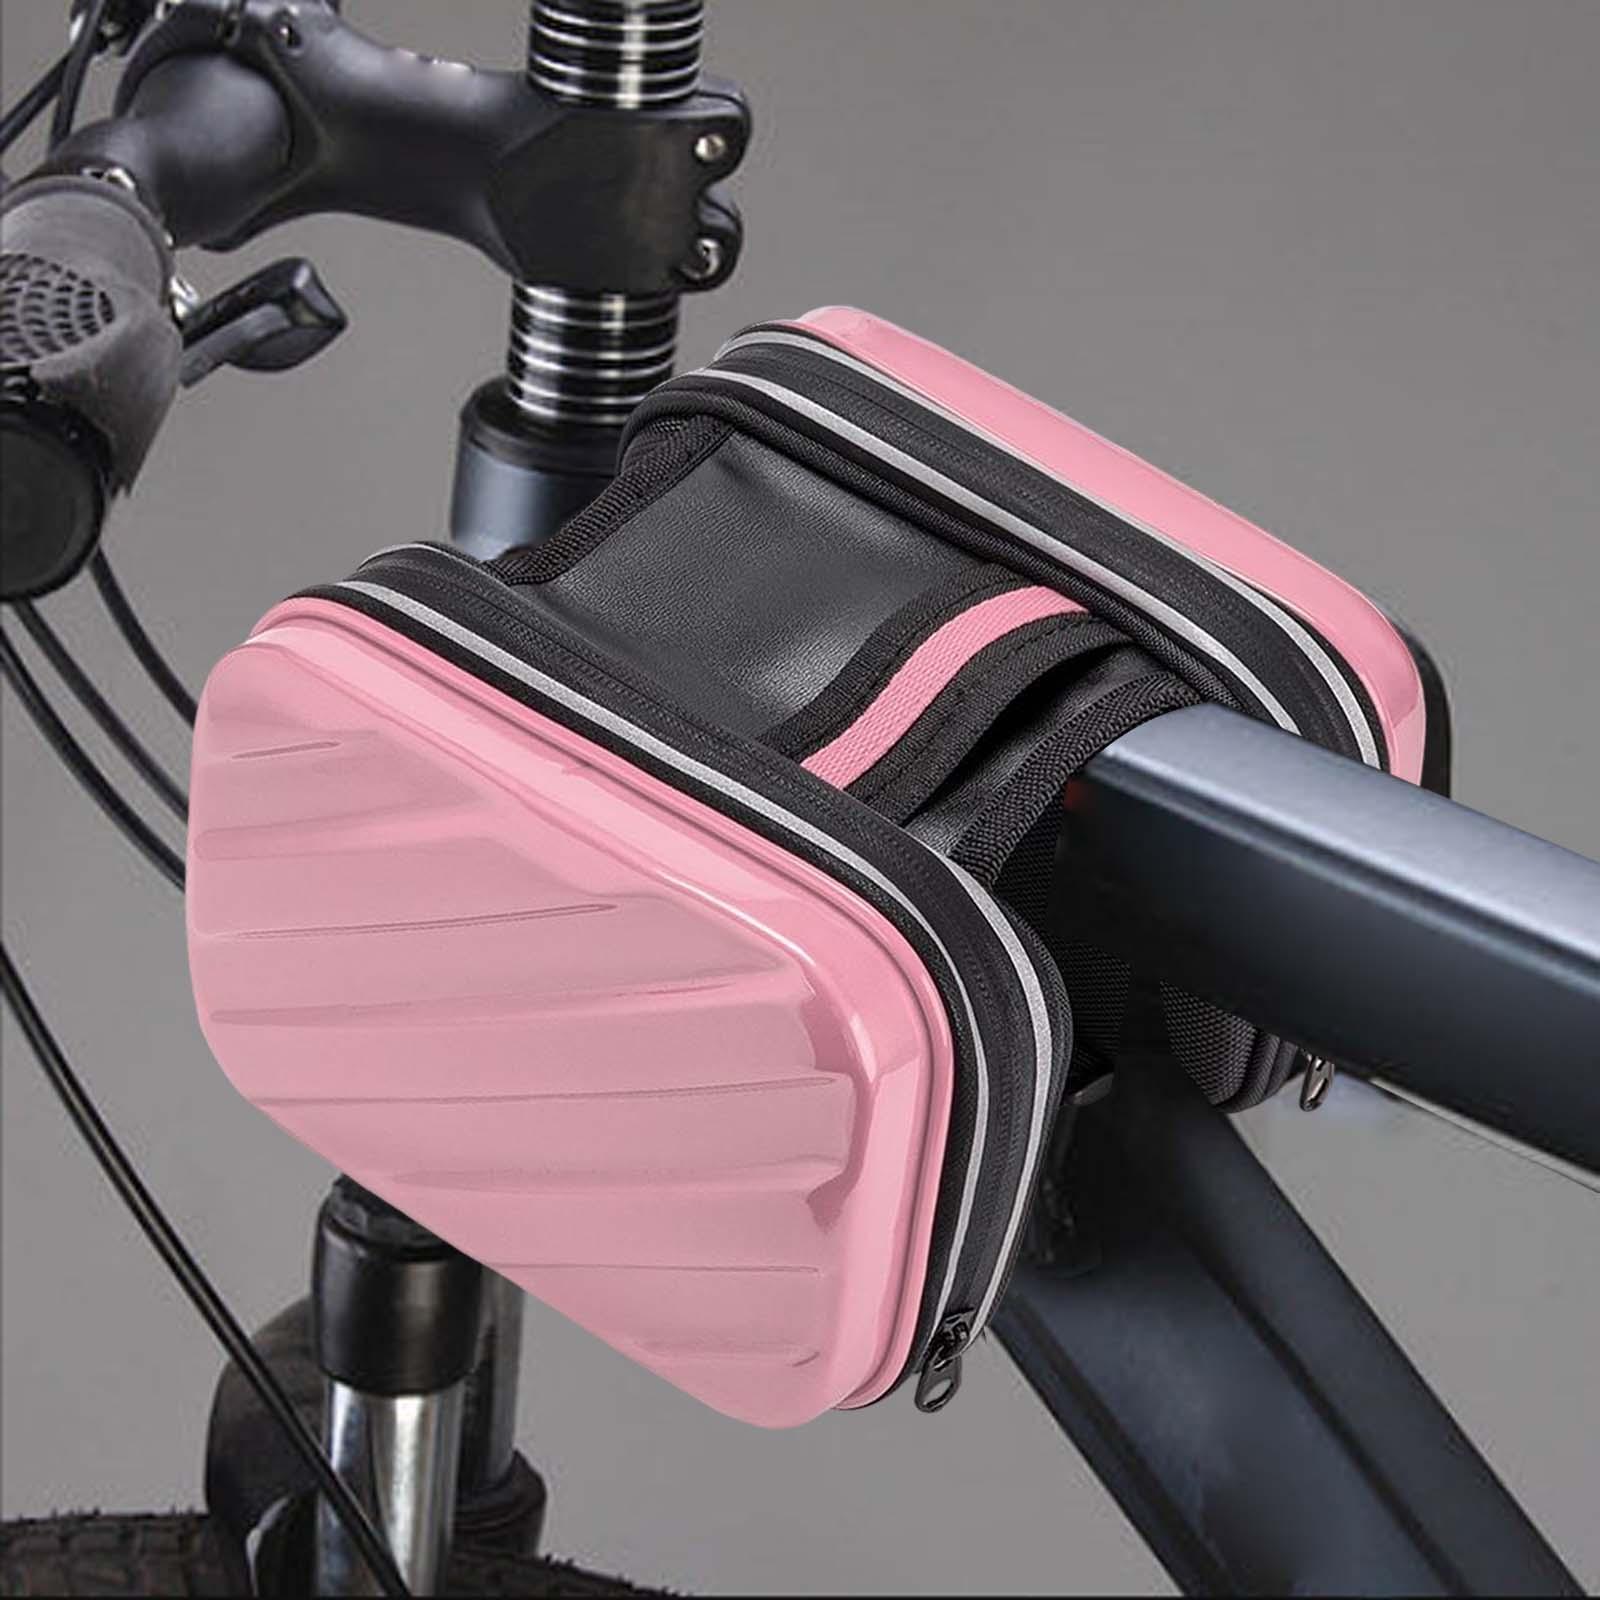 Hard Shell Bike Frame Front Bag Large Capacity for Keys Small Tools Storage Pink